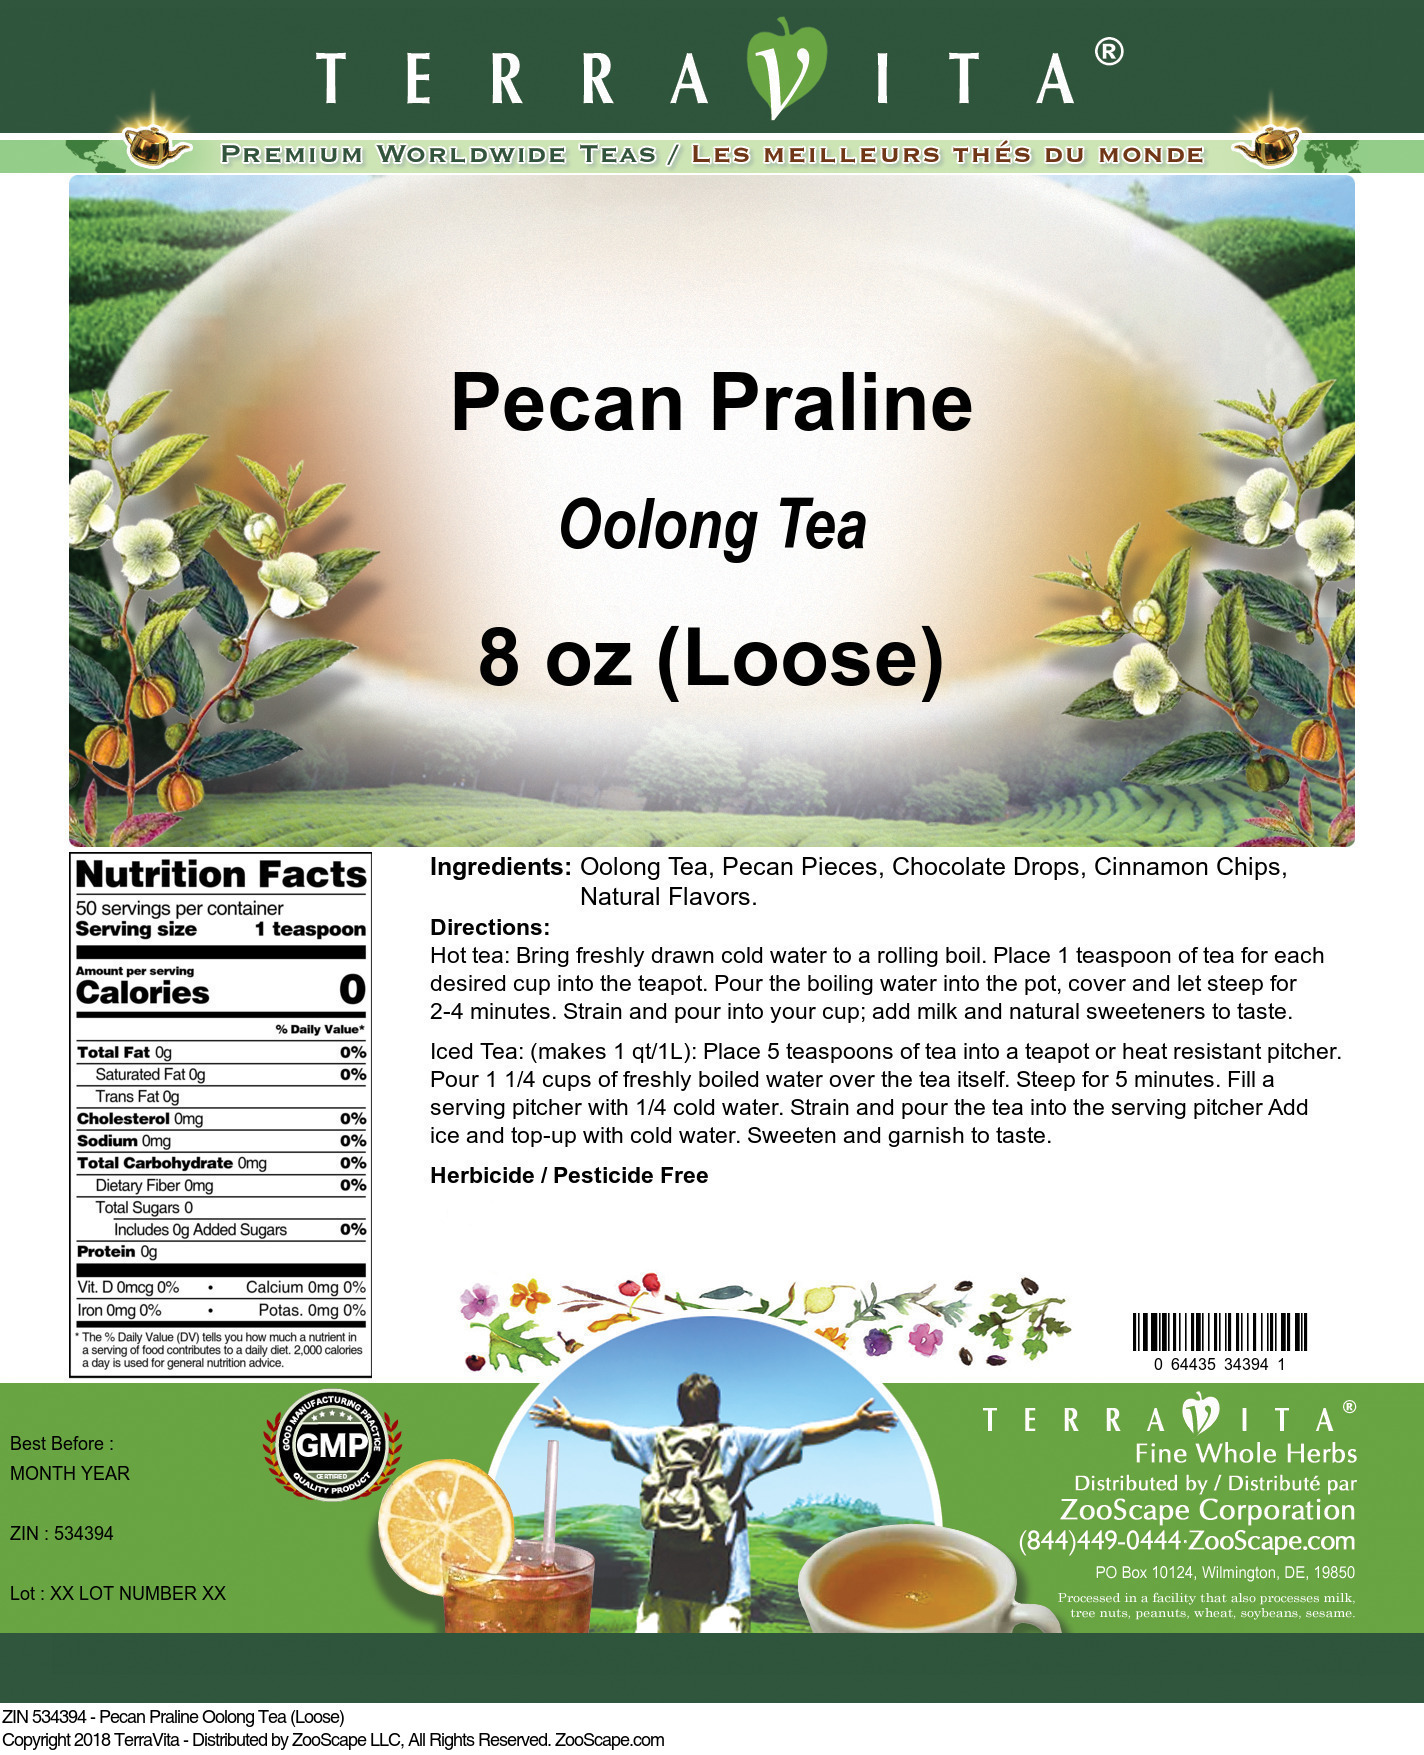 Pecan Praline Oolong Tea (Loose) - Label